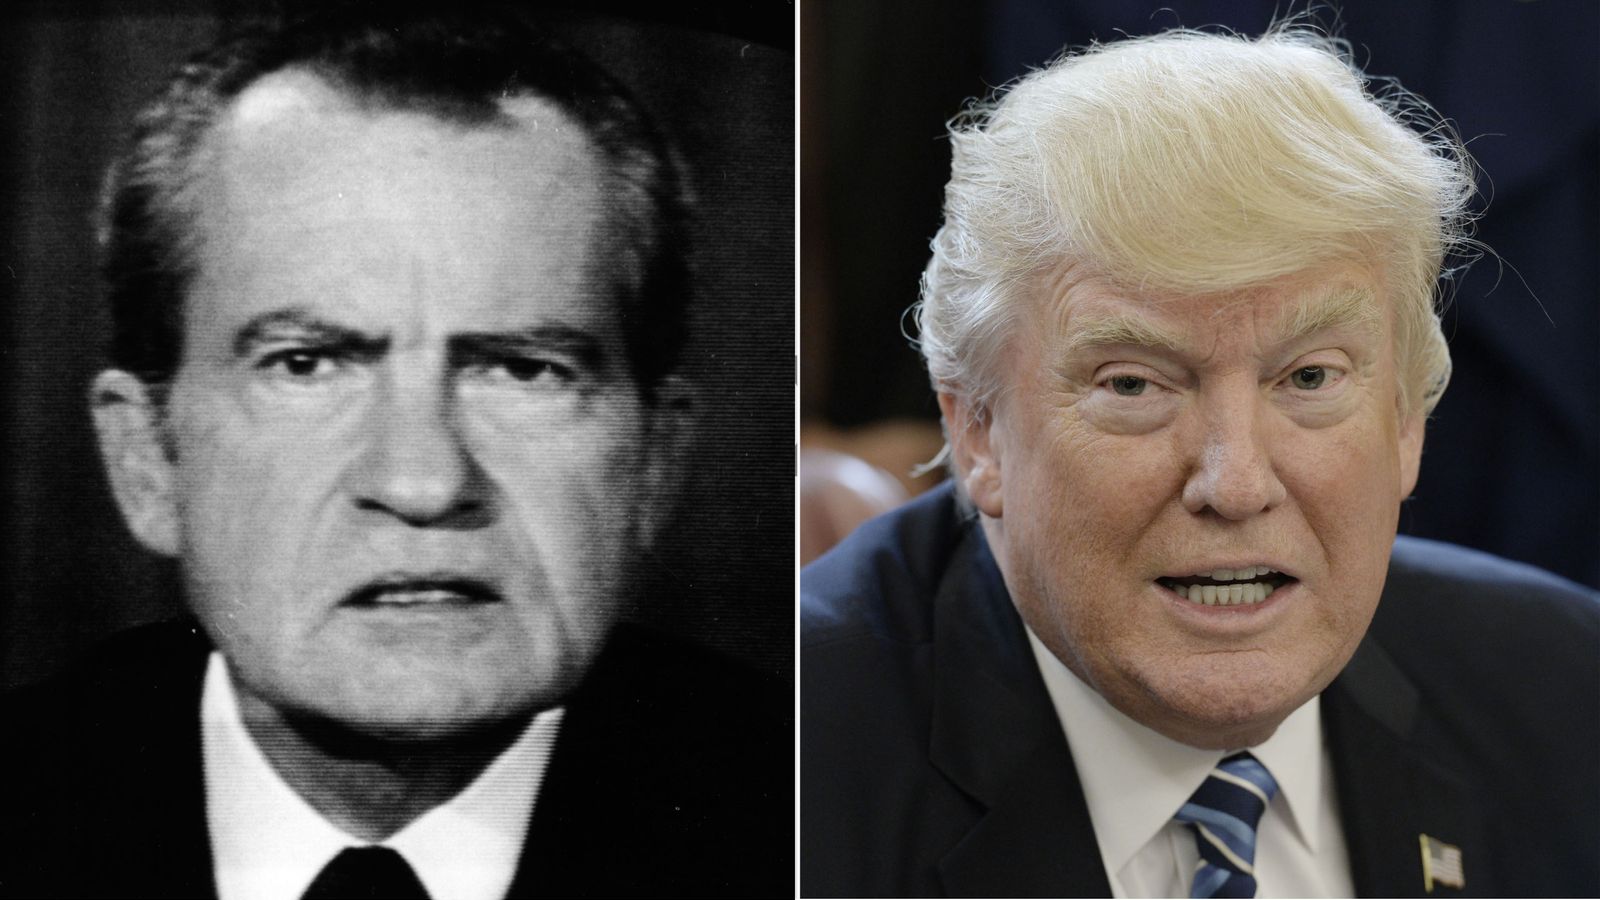 Richard Nixon (L) and Donald Trump